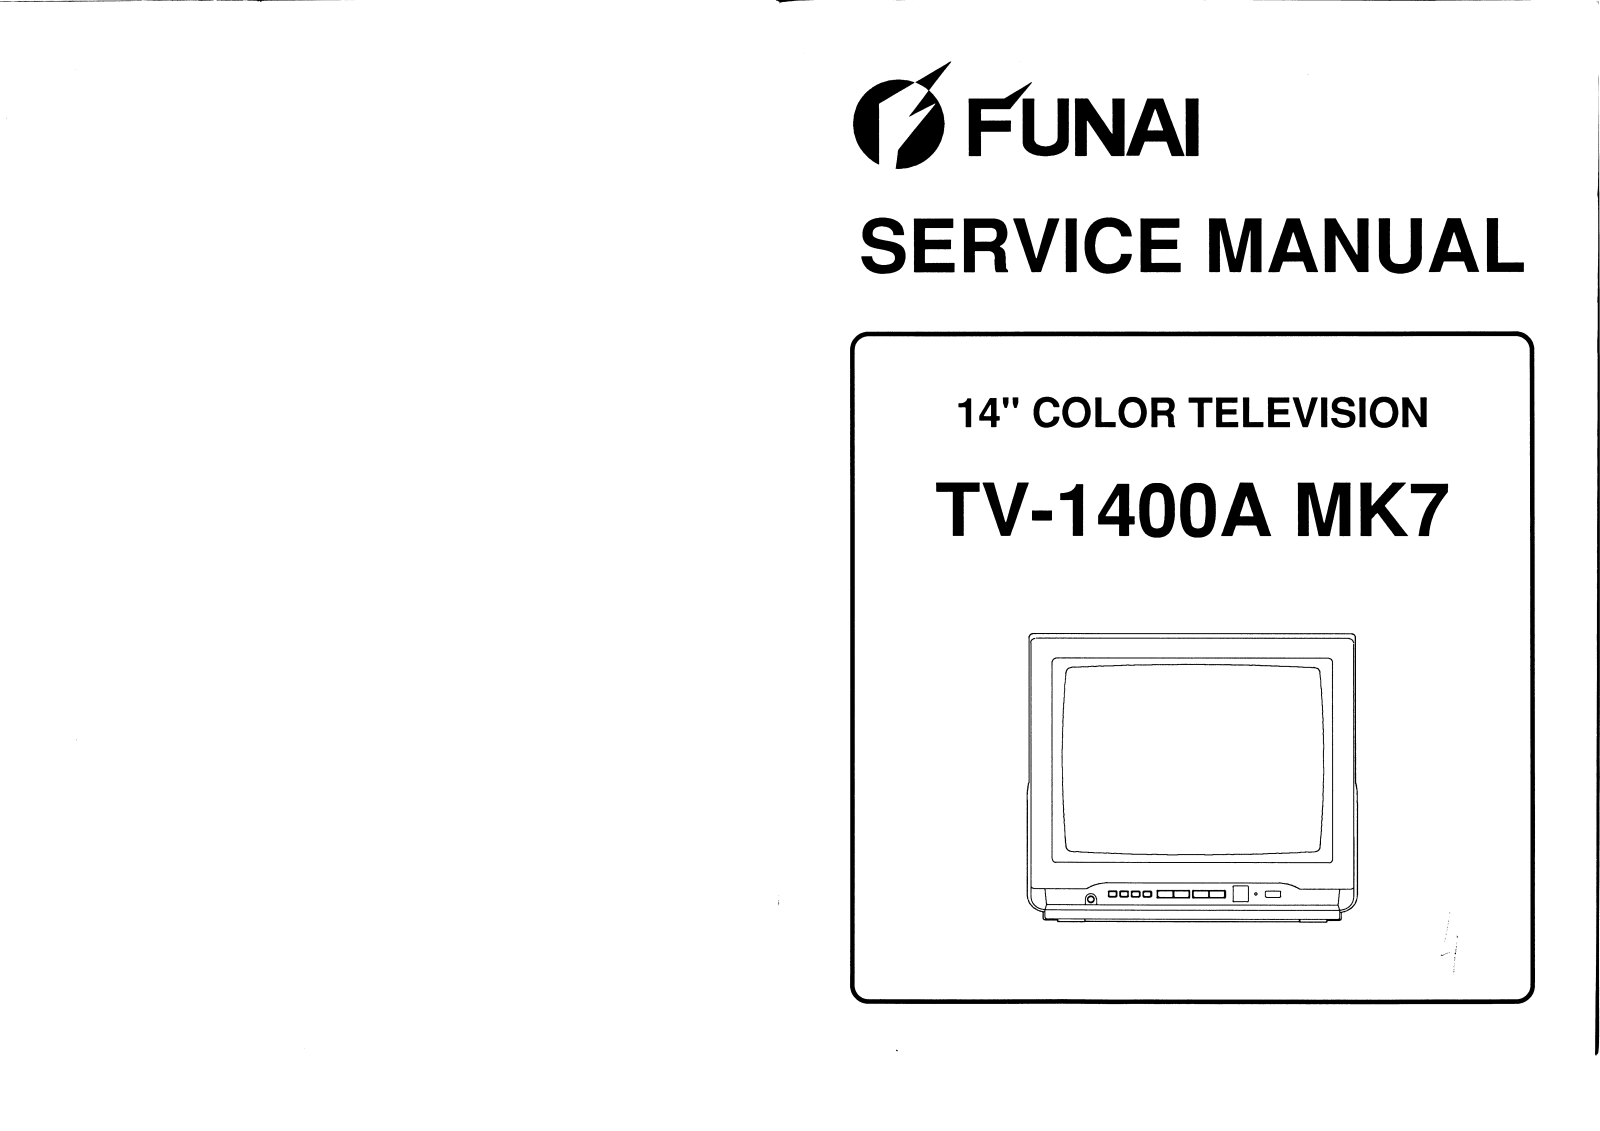 Funai TV-1400A MK7 Service manual